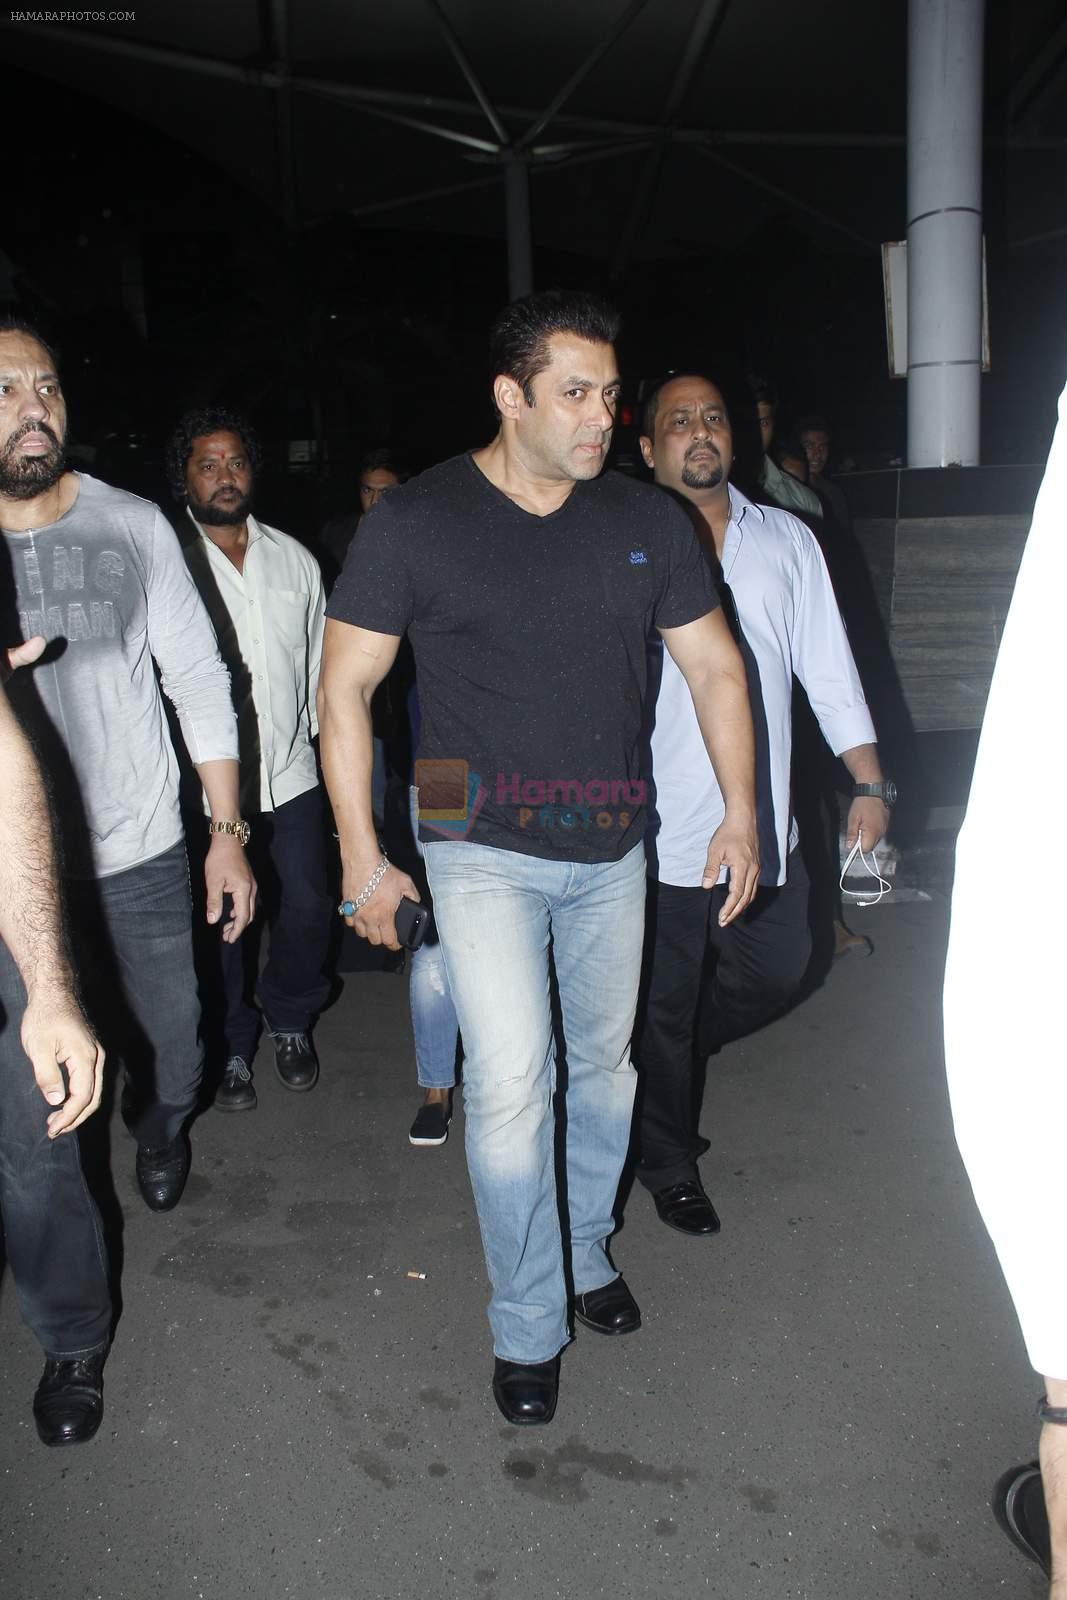 Salman Khan return from gurgaon on 5th Sept 2015